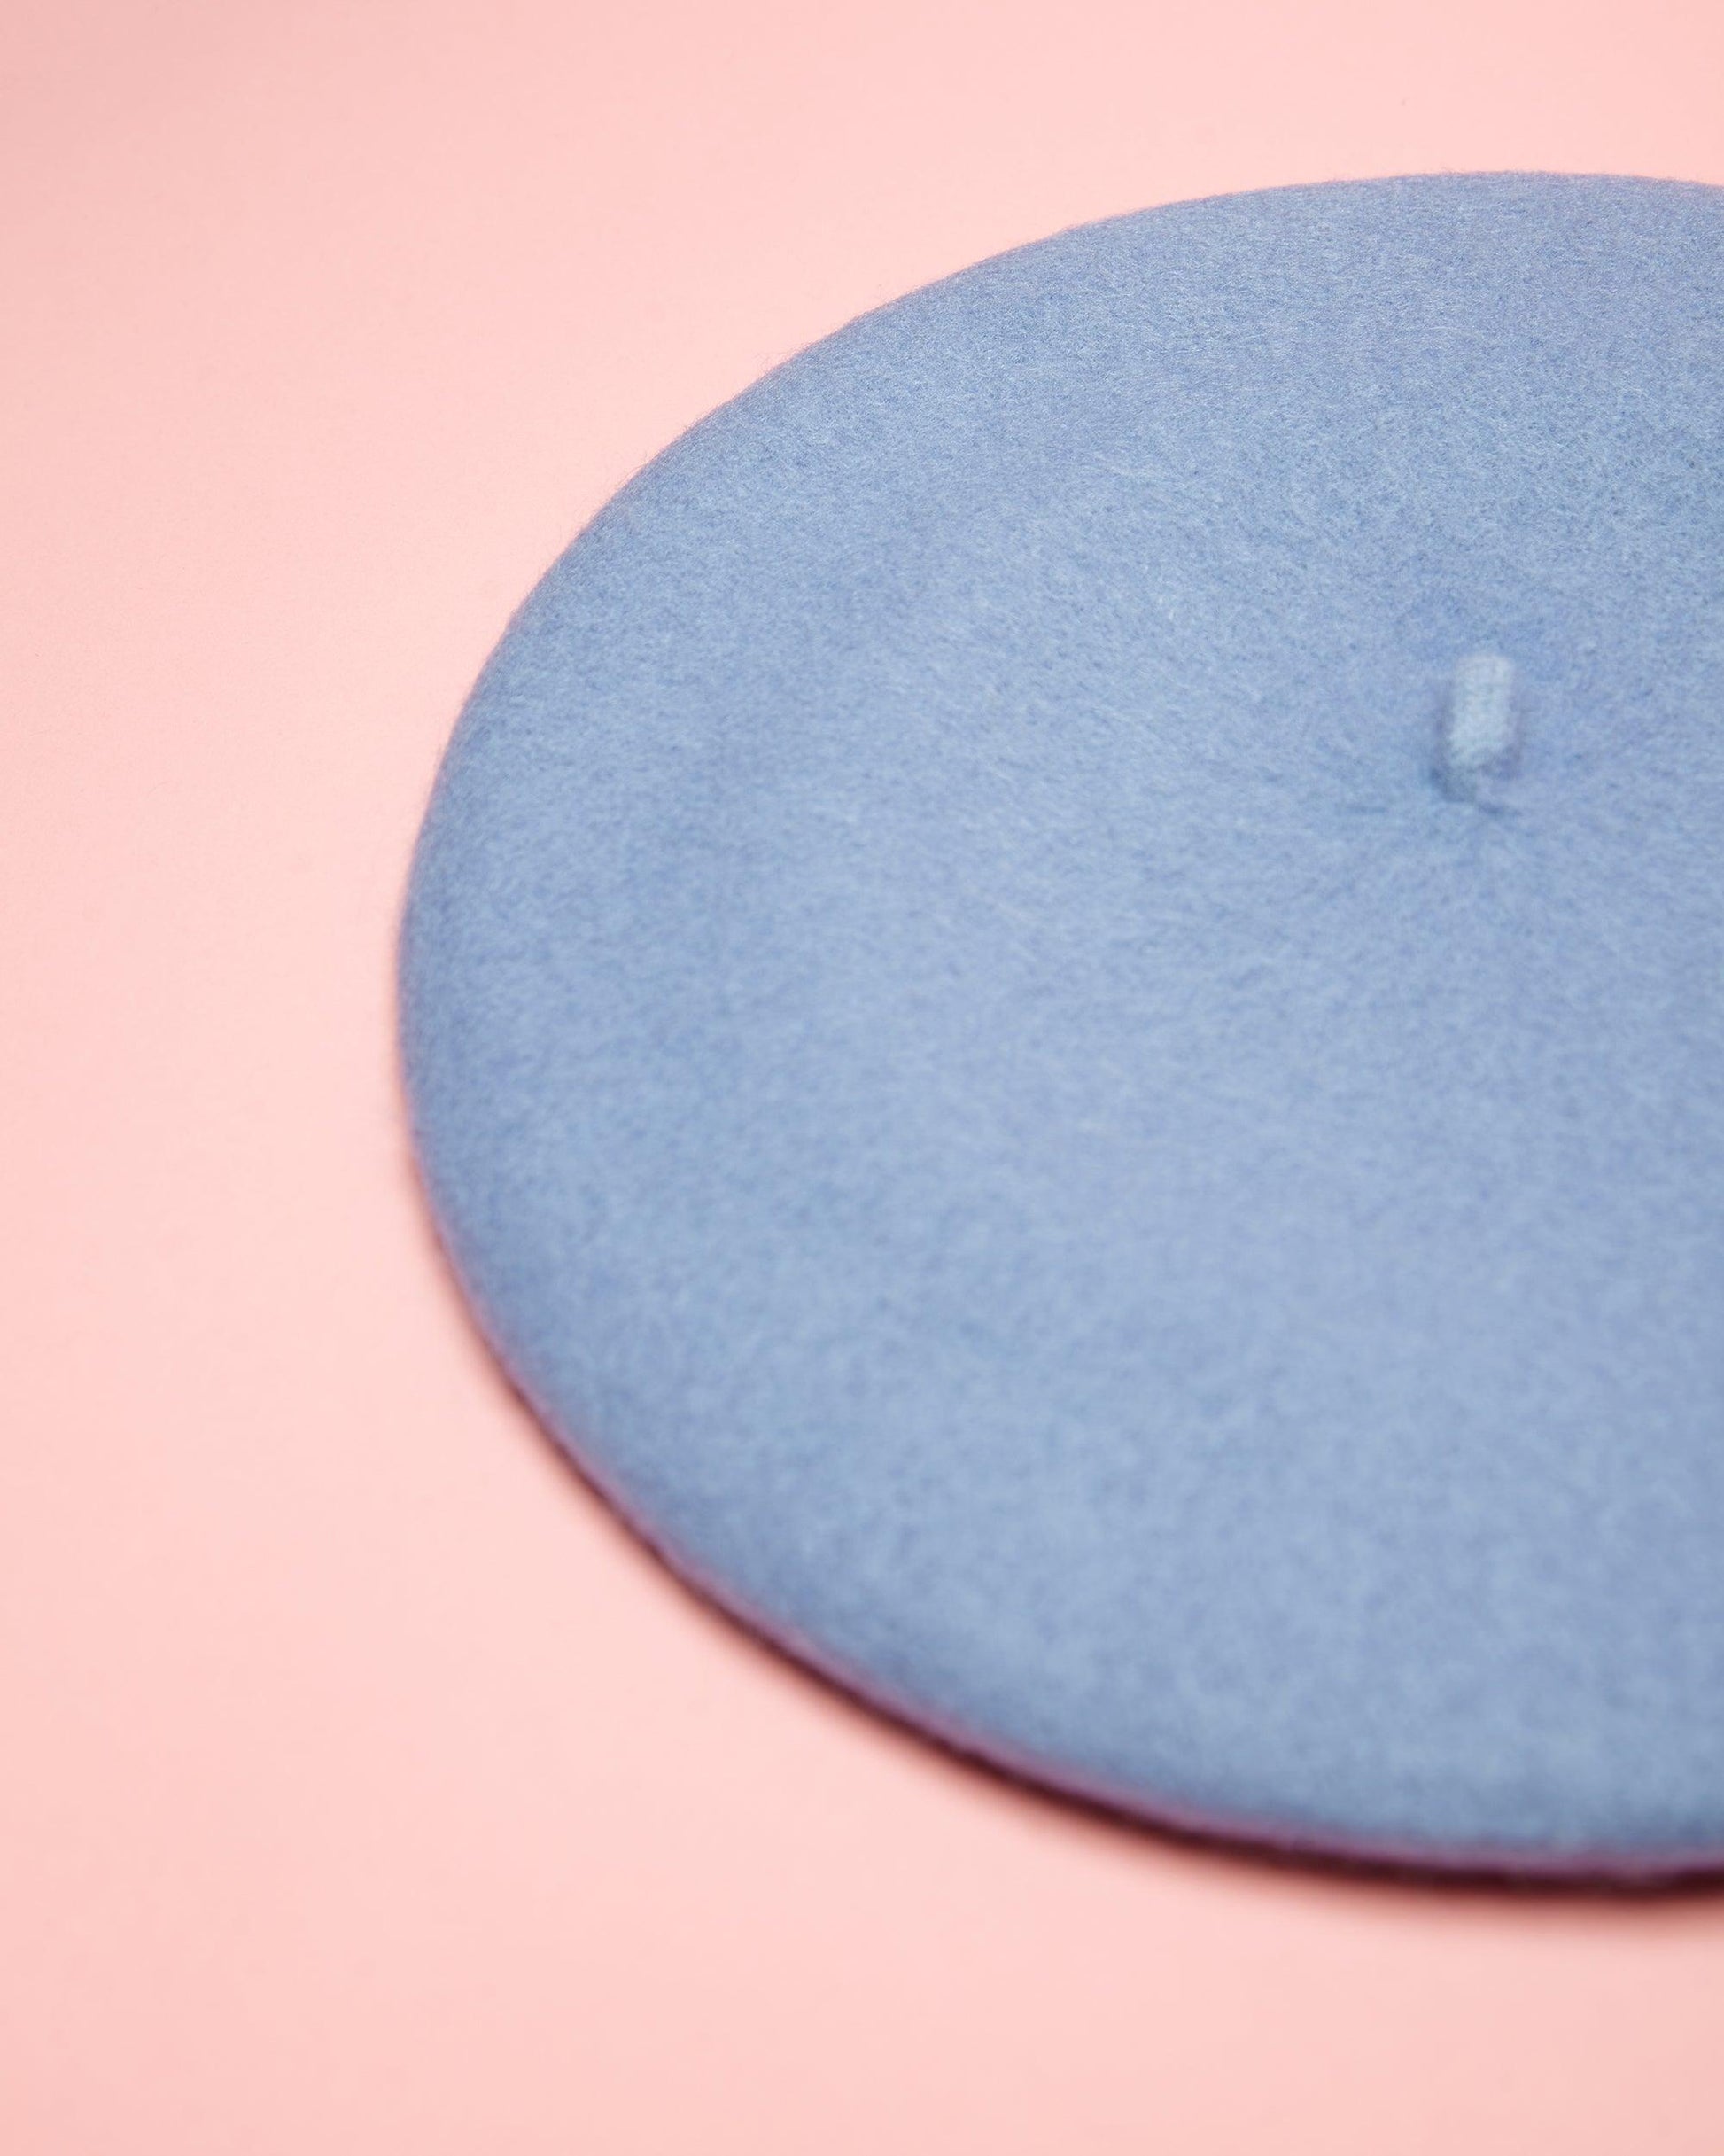 HOMO beret - light blue | One size fits all. - HOMOLONDON